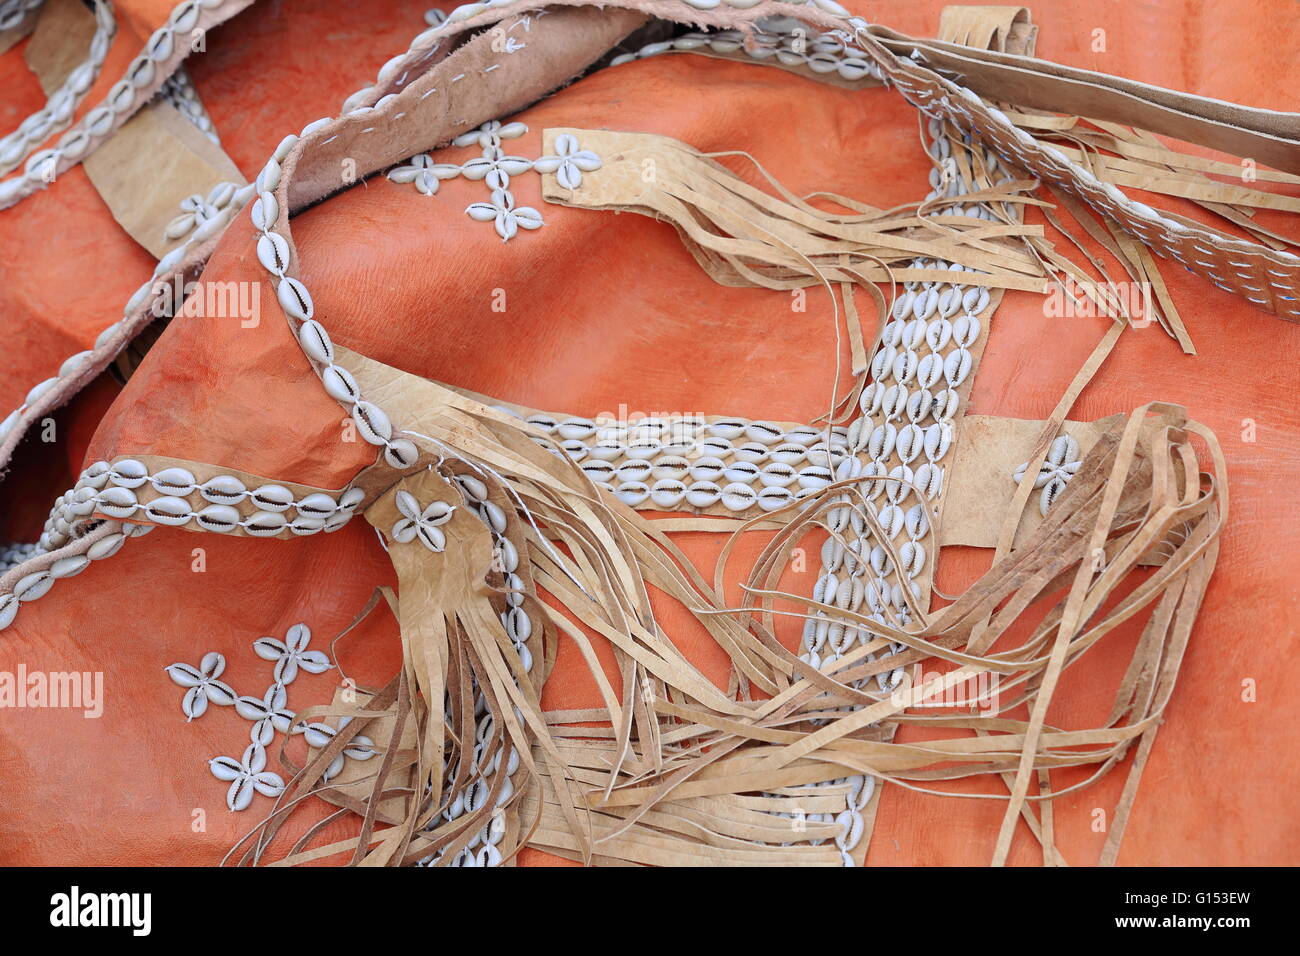 Etnici cinghie tradizionale fatta di gusci cowrie cuciti su frange Cinturini di pelle impostata sul colore arancio bucce. Mek'ele-Etiopia Foto Stock